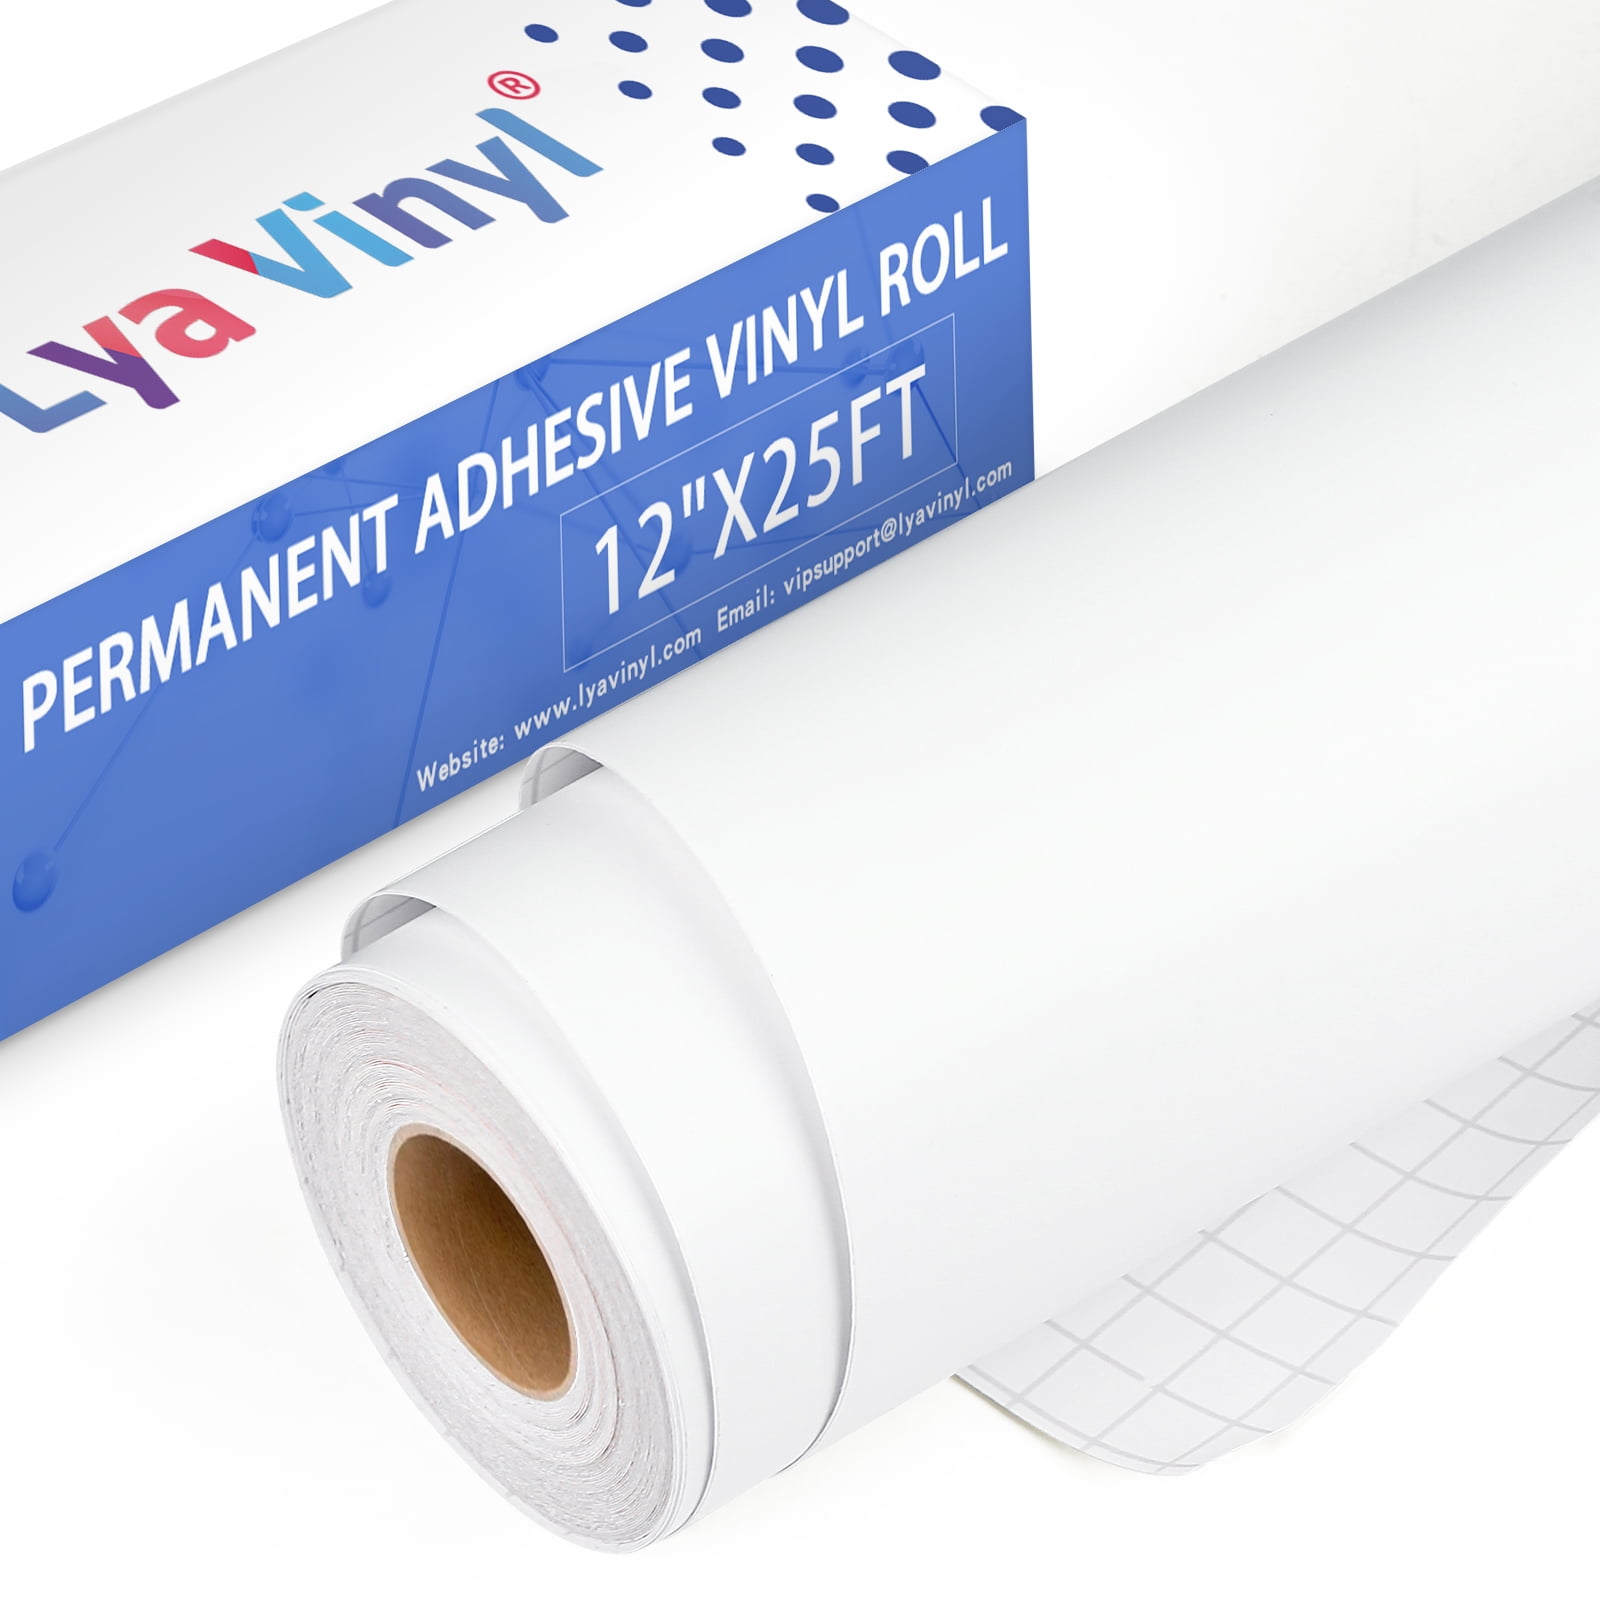 Permanent Adhesive Vinyl for Cricut (30pack, 12x12) - Lya Vinyl Mixed  Series